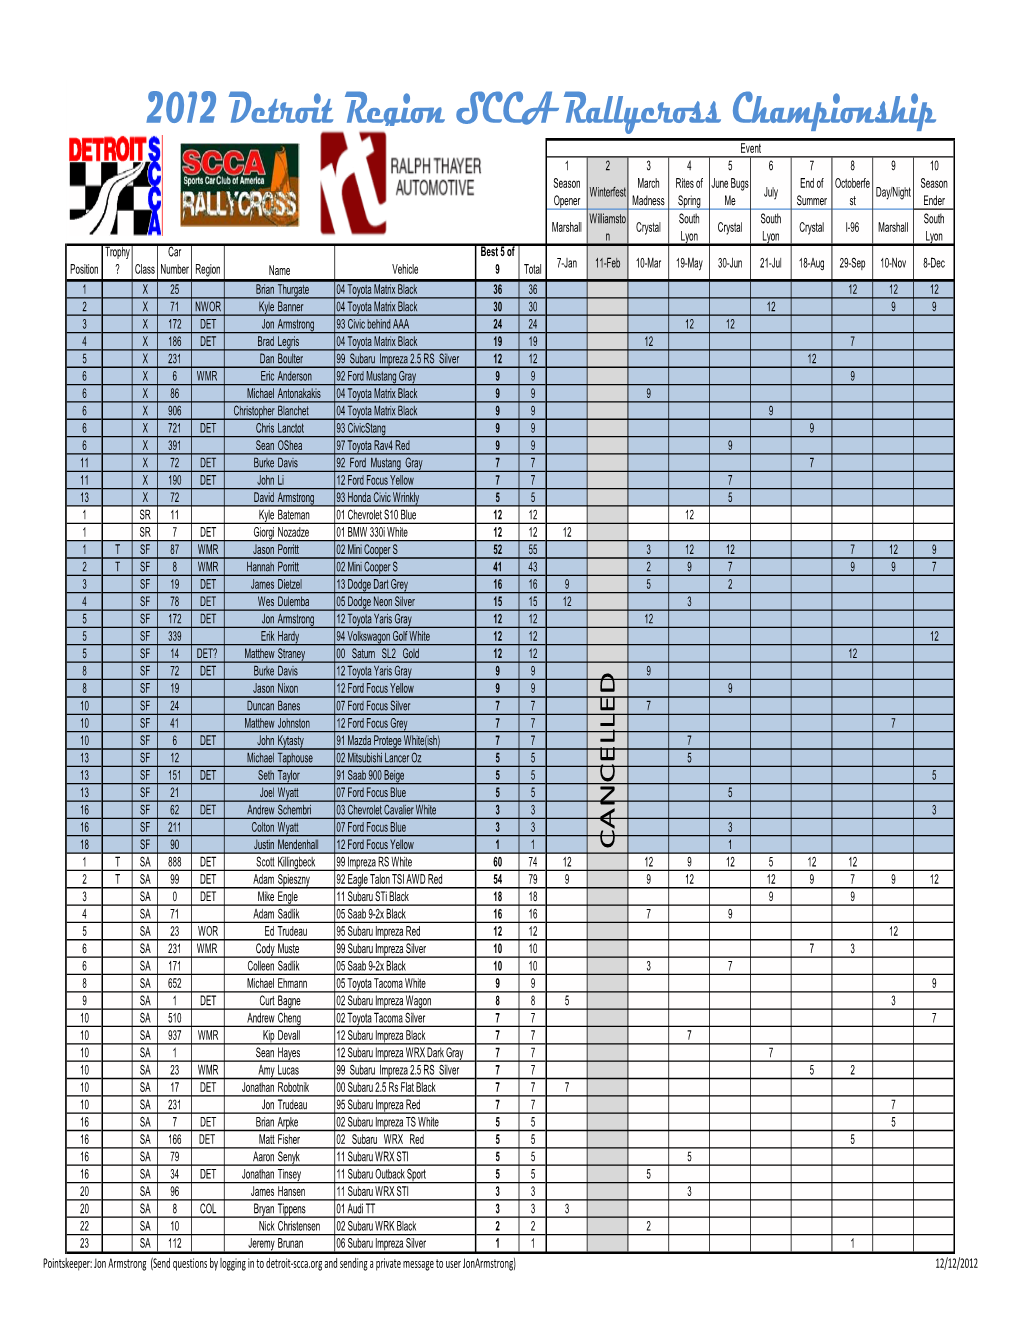 2012 Rallycross Championship Points